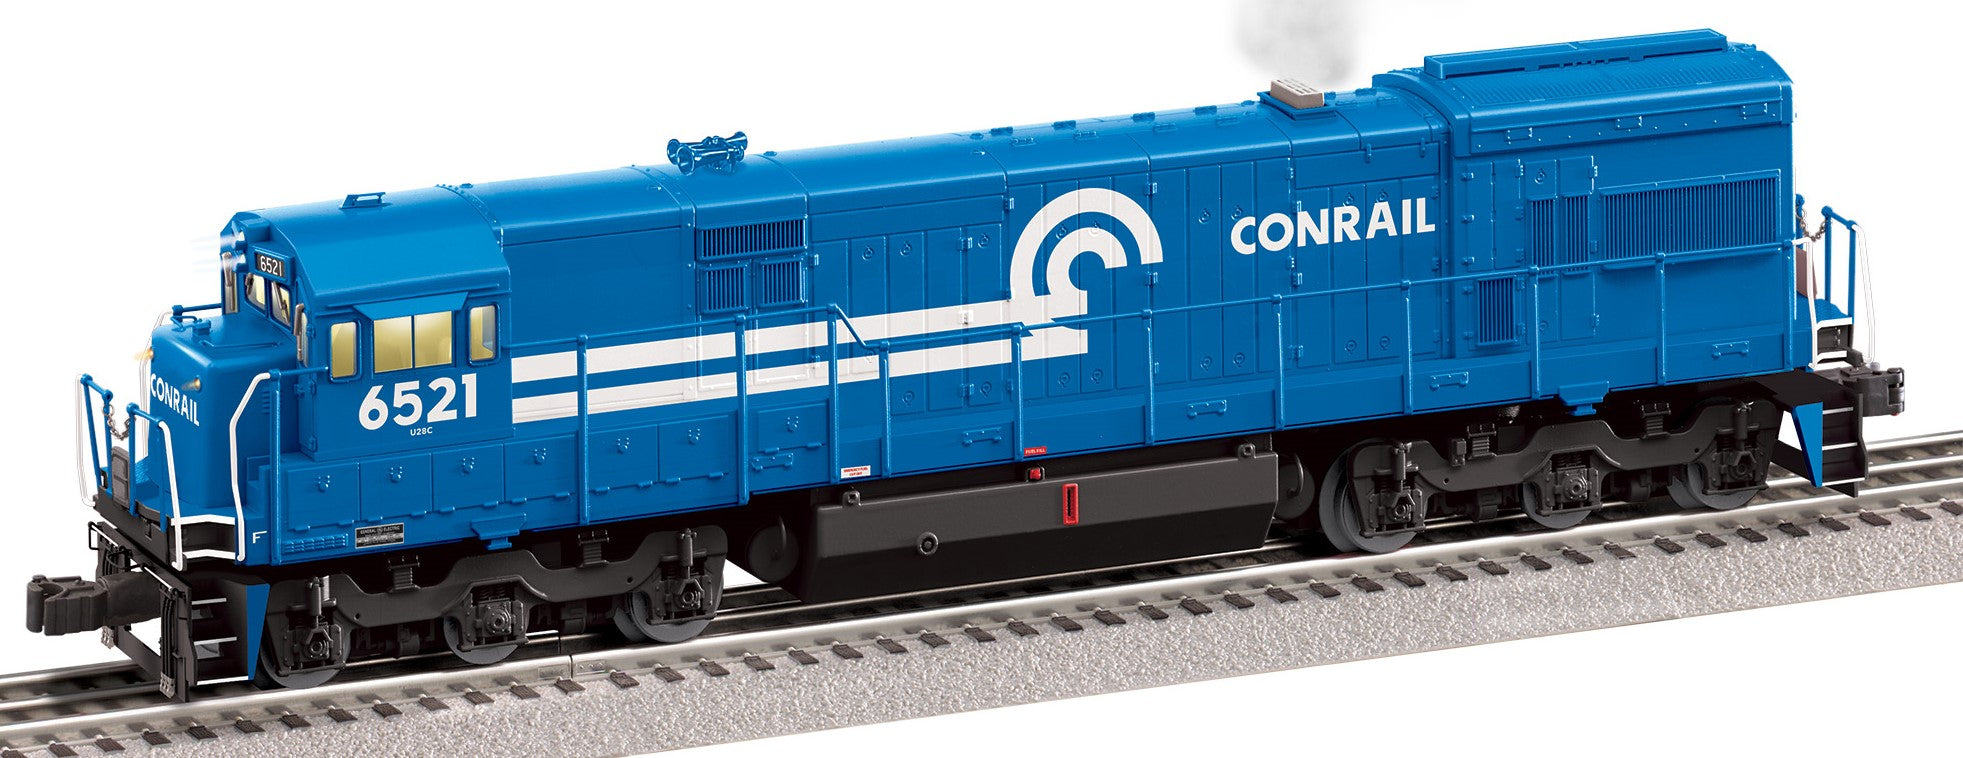 Lionel 2433731 - Legacy U28C Diesel Locomotive "Conrail" #6521